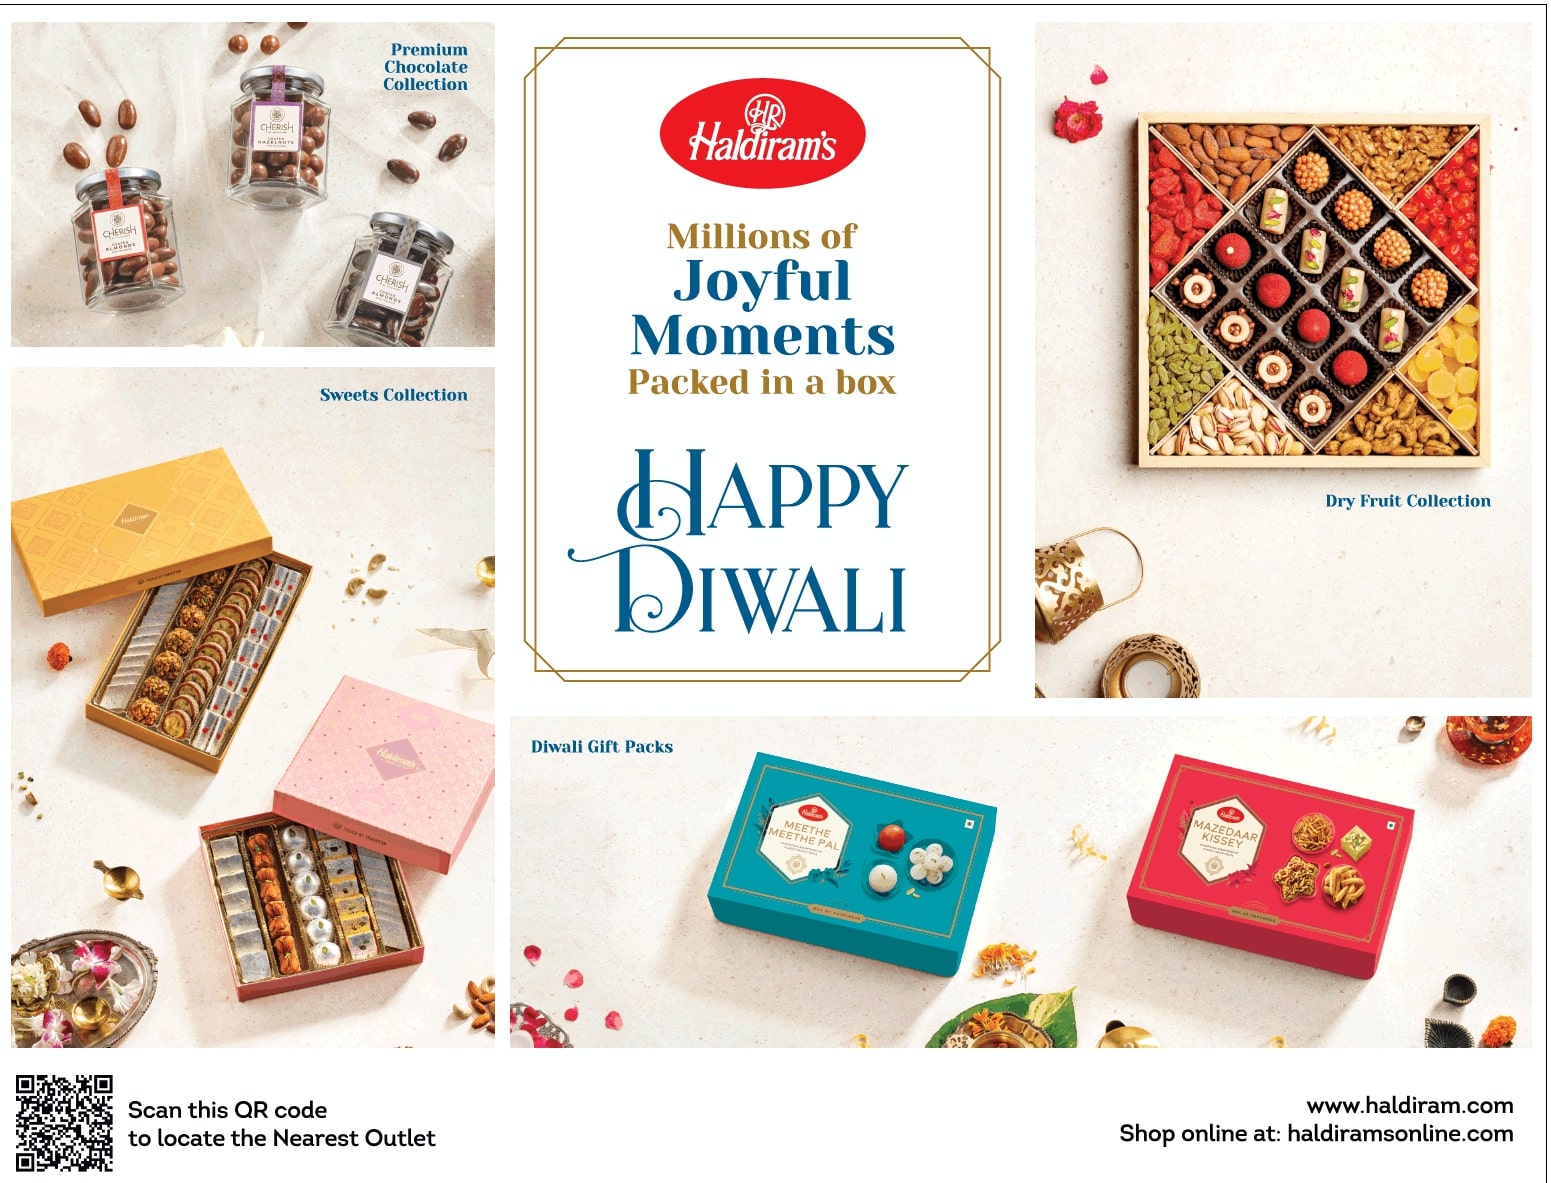 halidram-millions-of-joyful-moments-packed-in-a-box-happy-diwali-ad-toi-delhi-8-11-2020